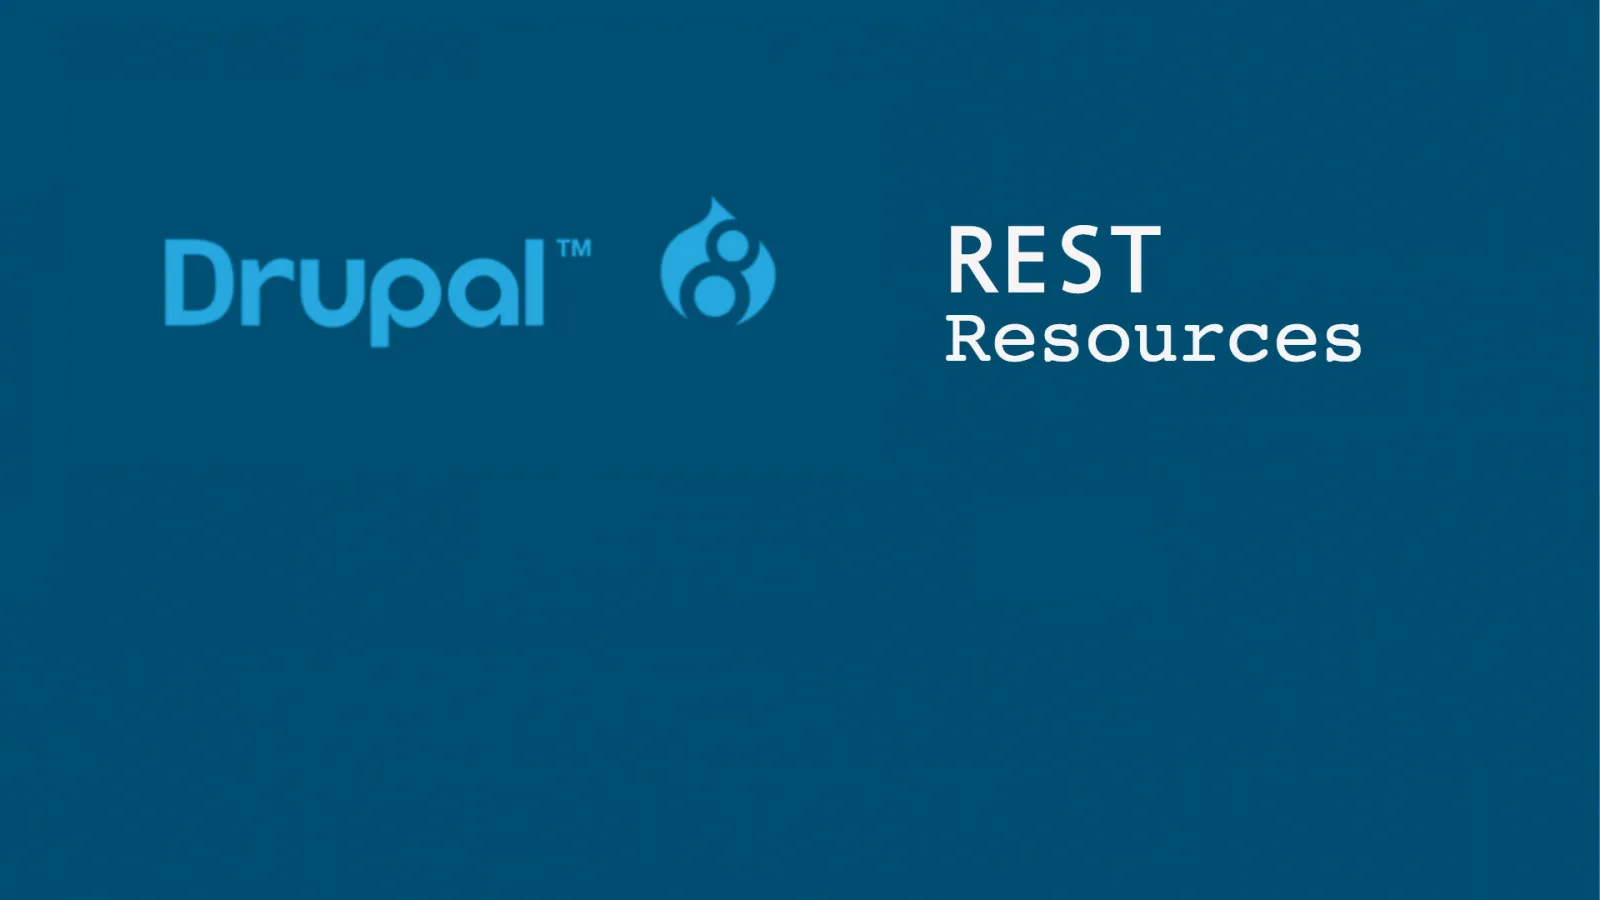 Create Rest Resource for GET Method in Drupal 8